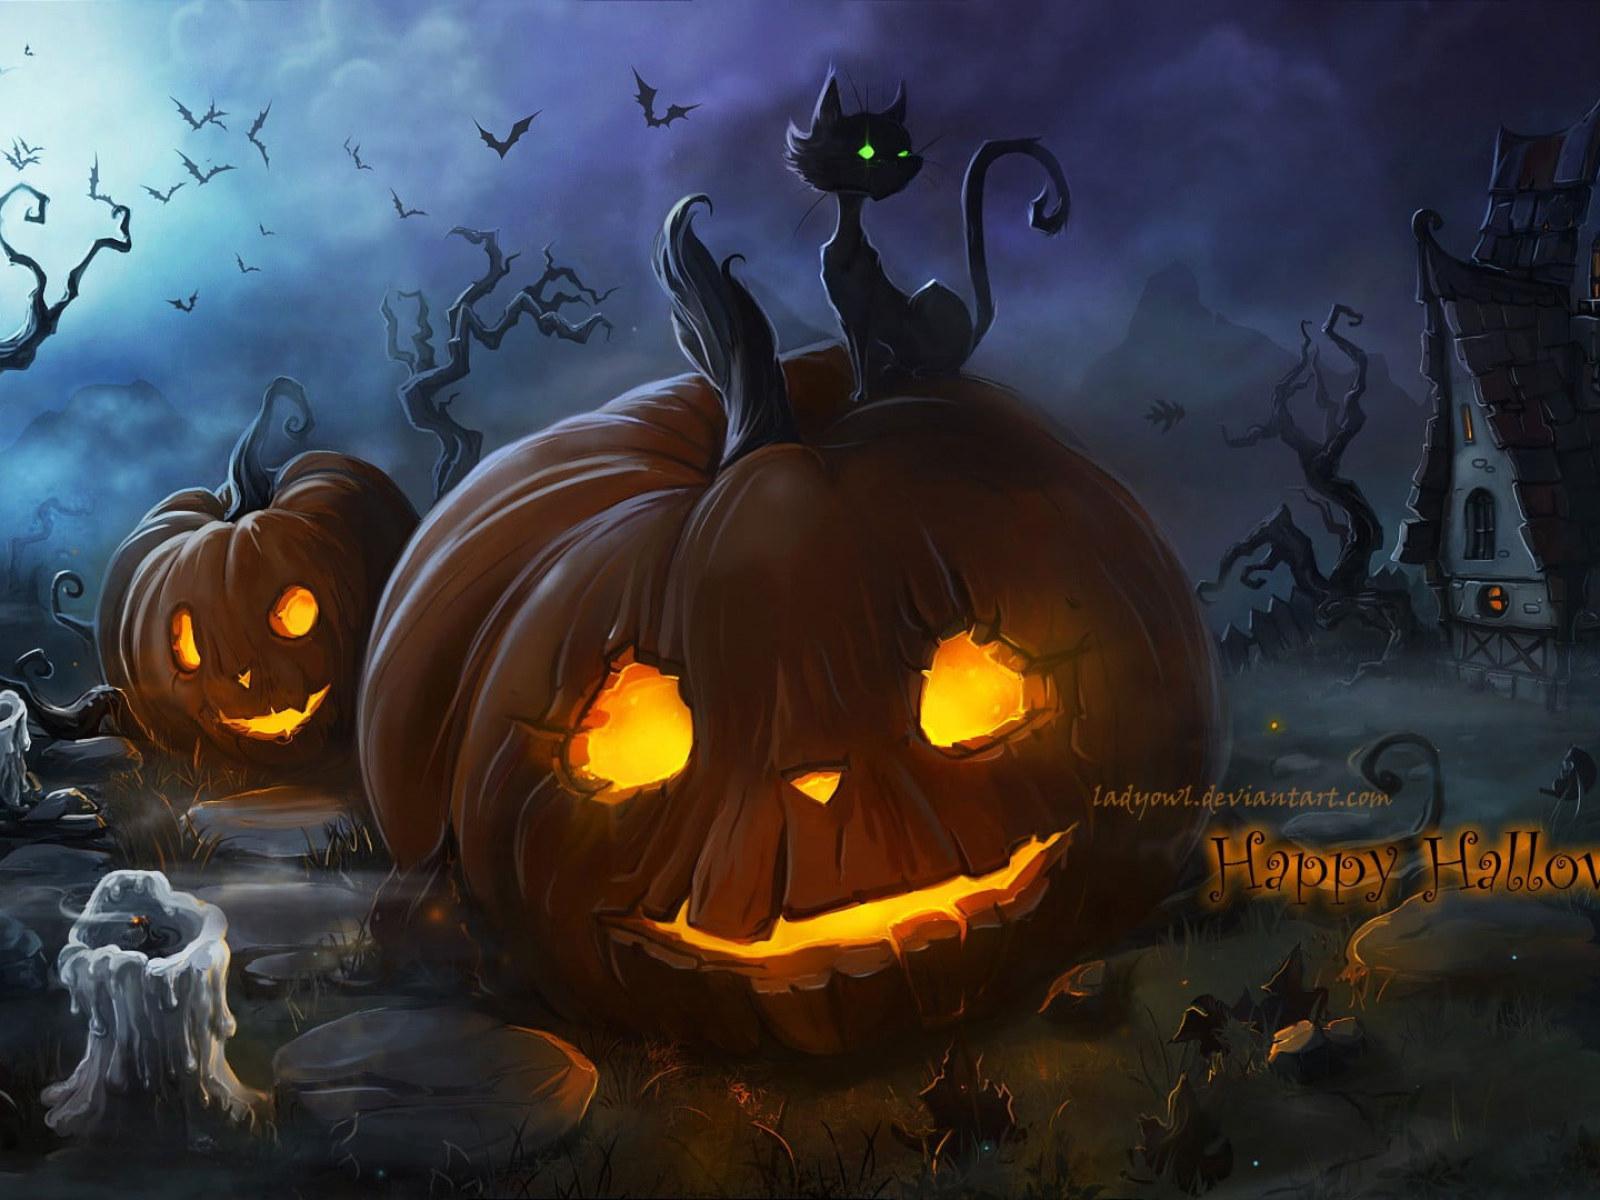 Halloween Digital Art Wallpapers - Top Free Halloween Digital Art ...